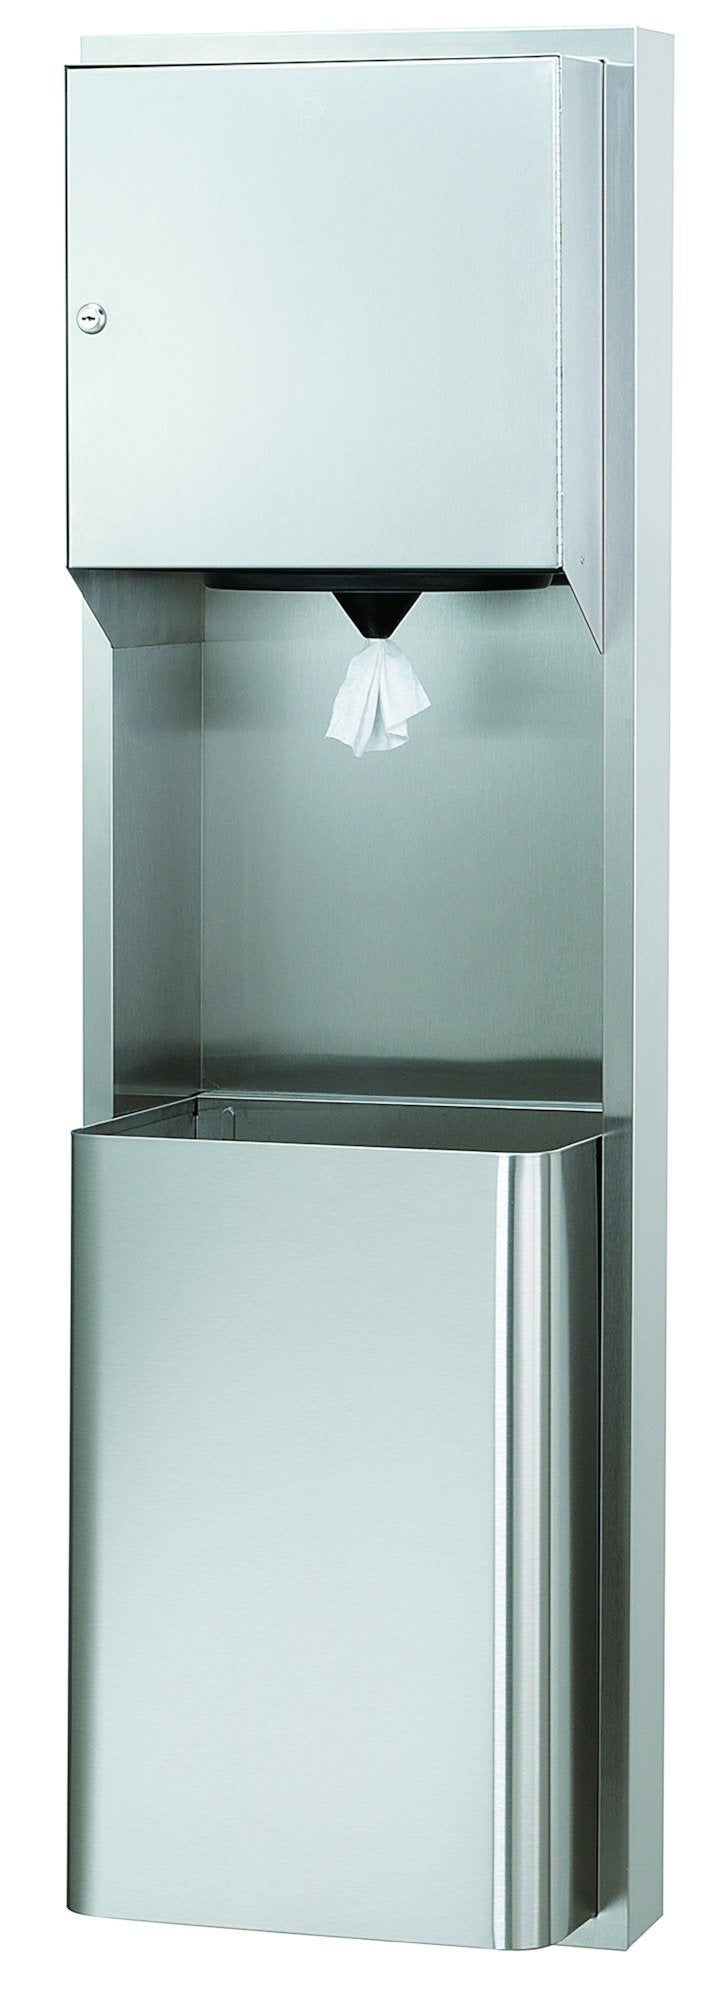 Bradley 236-100000 - Semi Recessed Paper Towel Dispenser and Waste Receptacle, 12 Gal